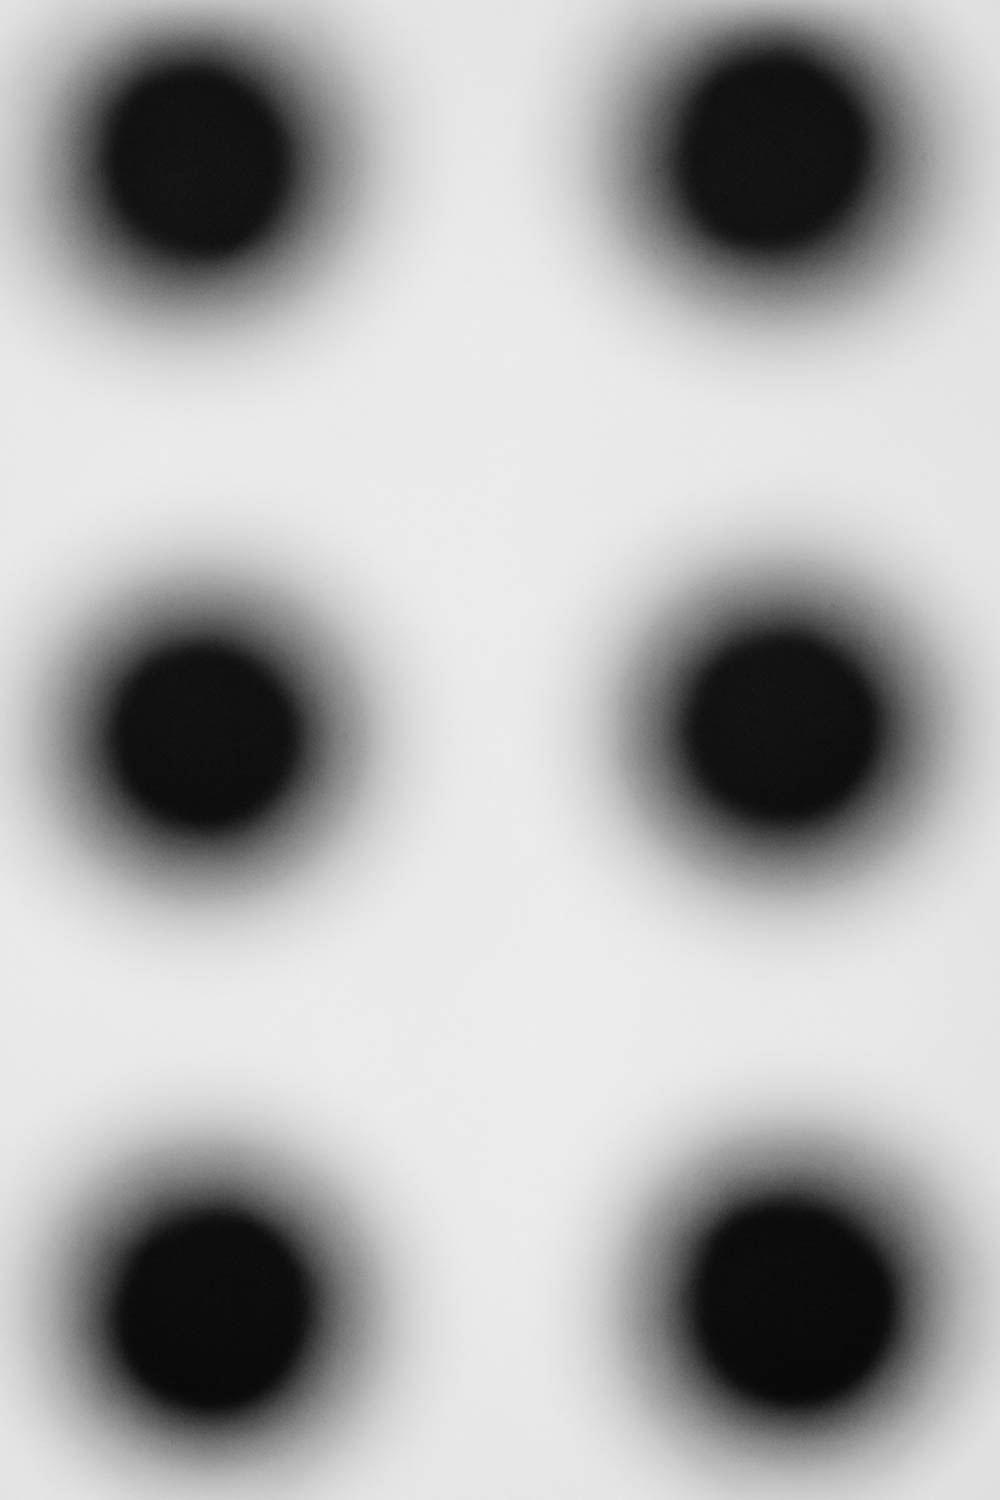 Six black circles artwork.